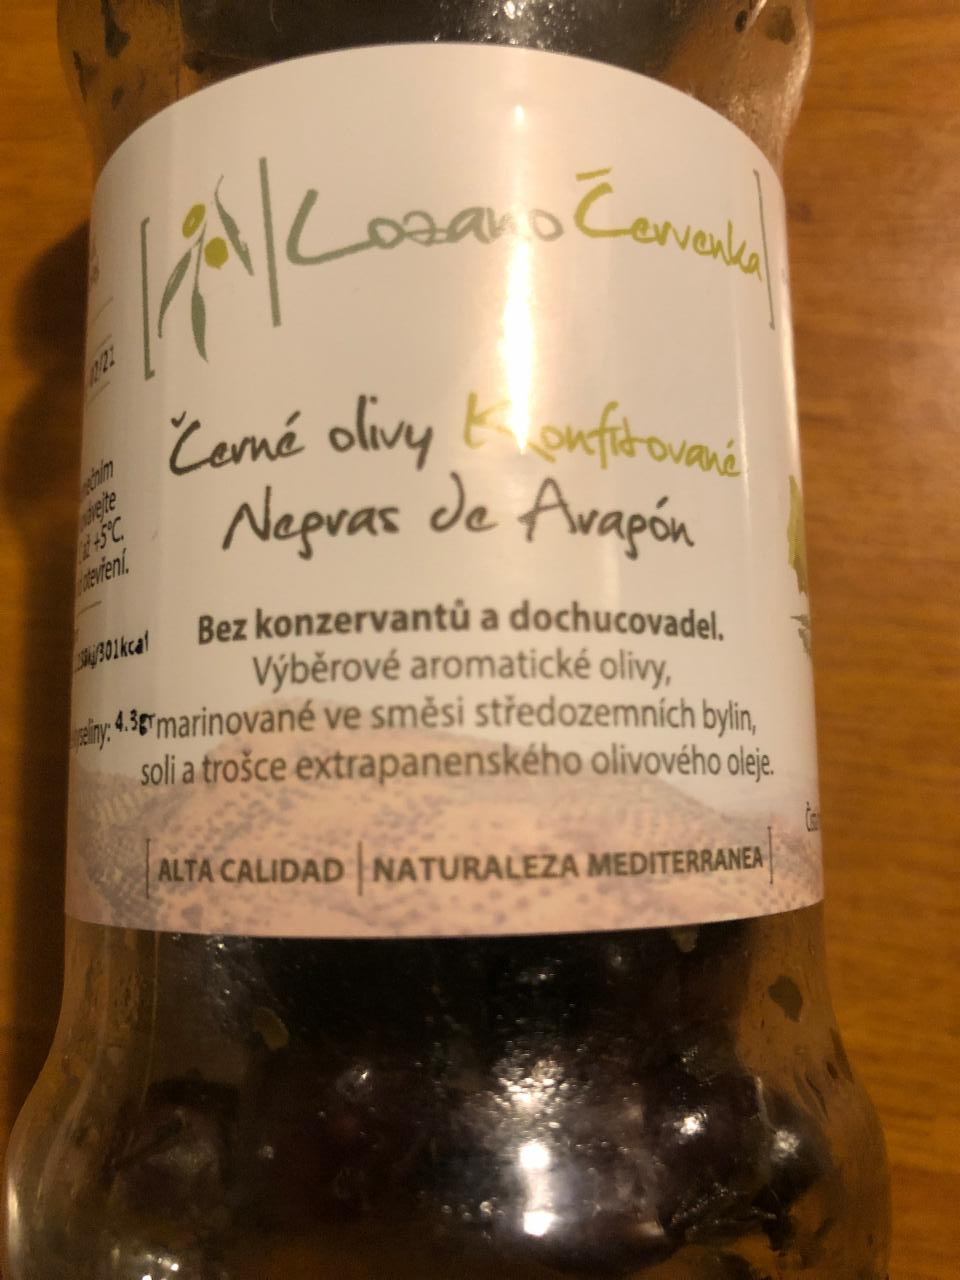 Fotografie - Olivy černé konfitované Negras de Aragon